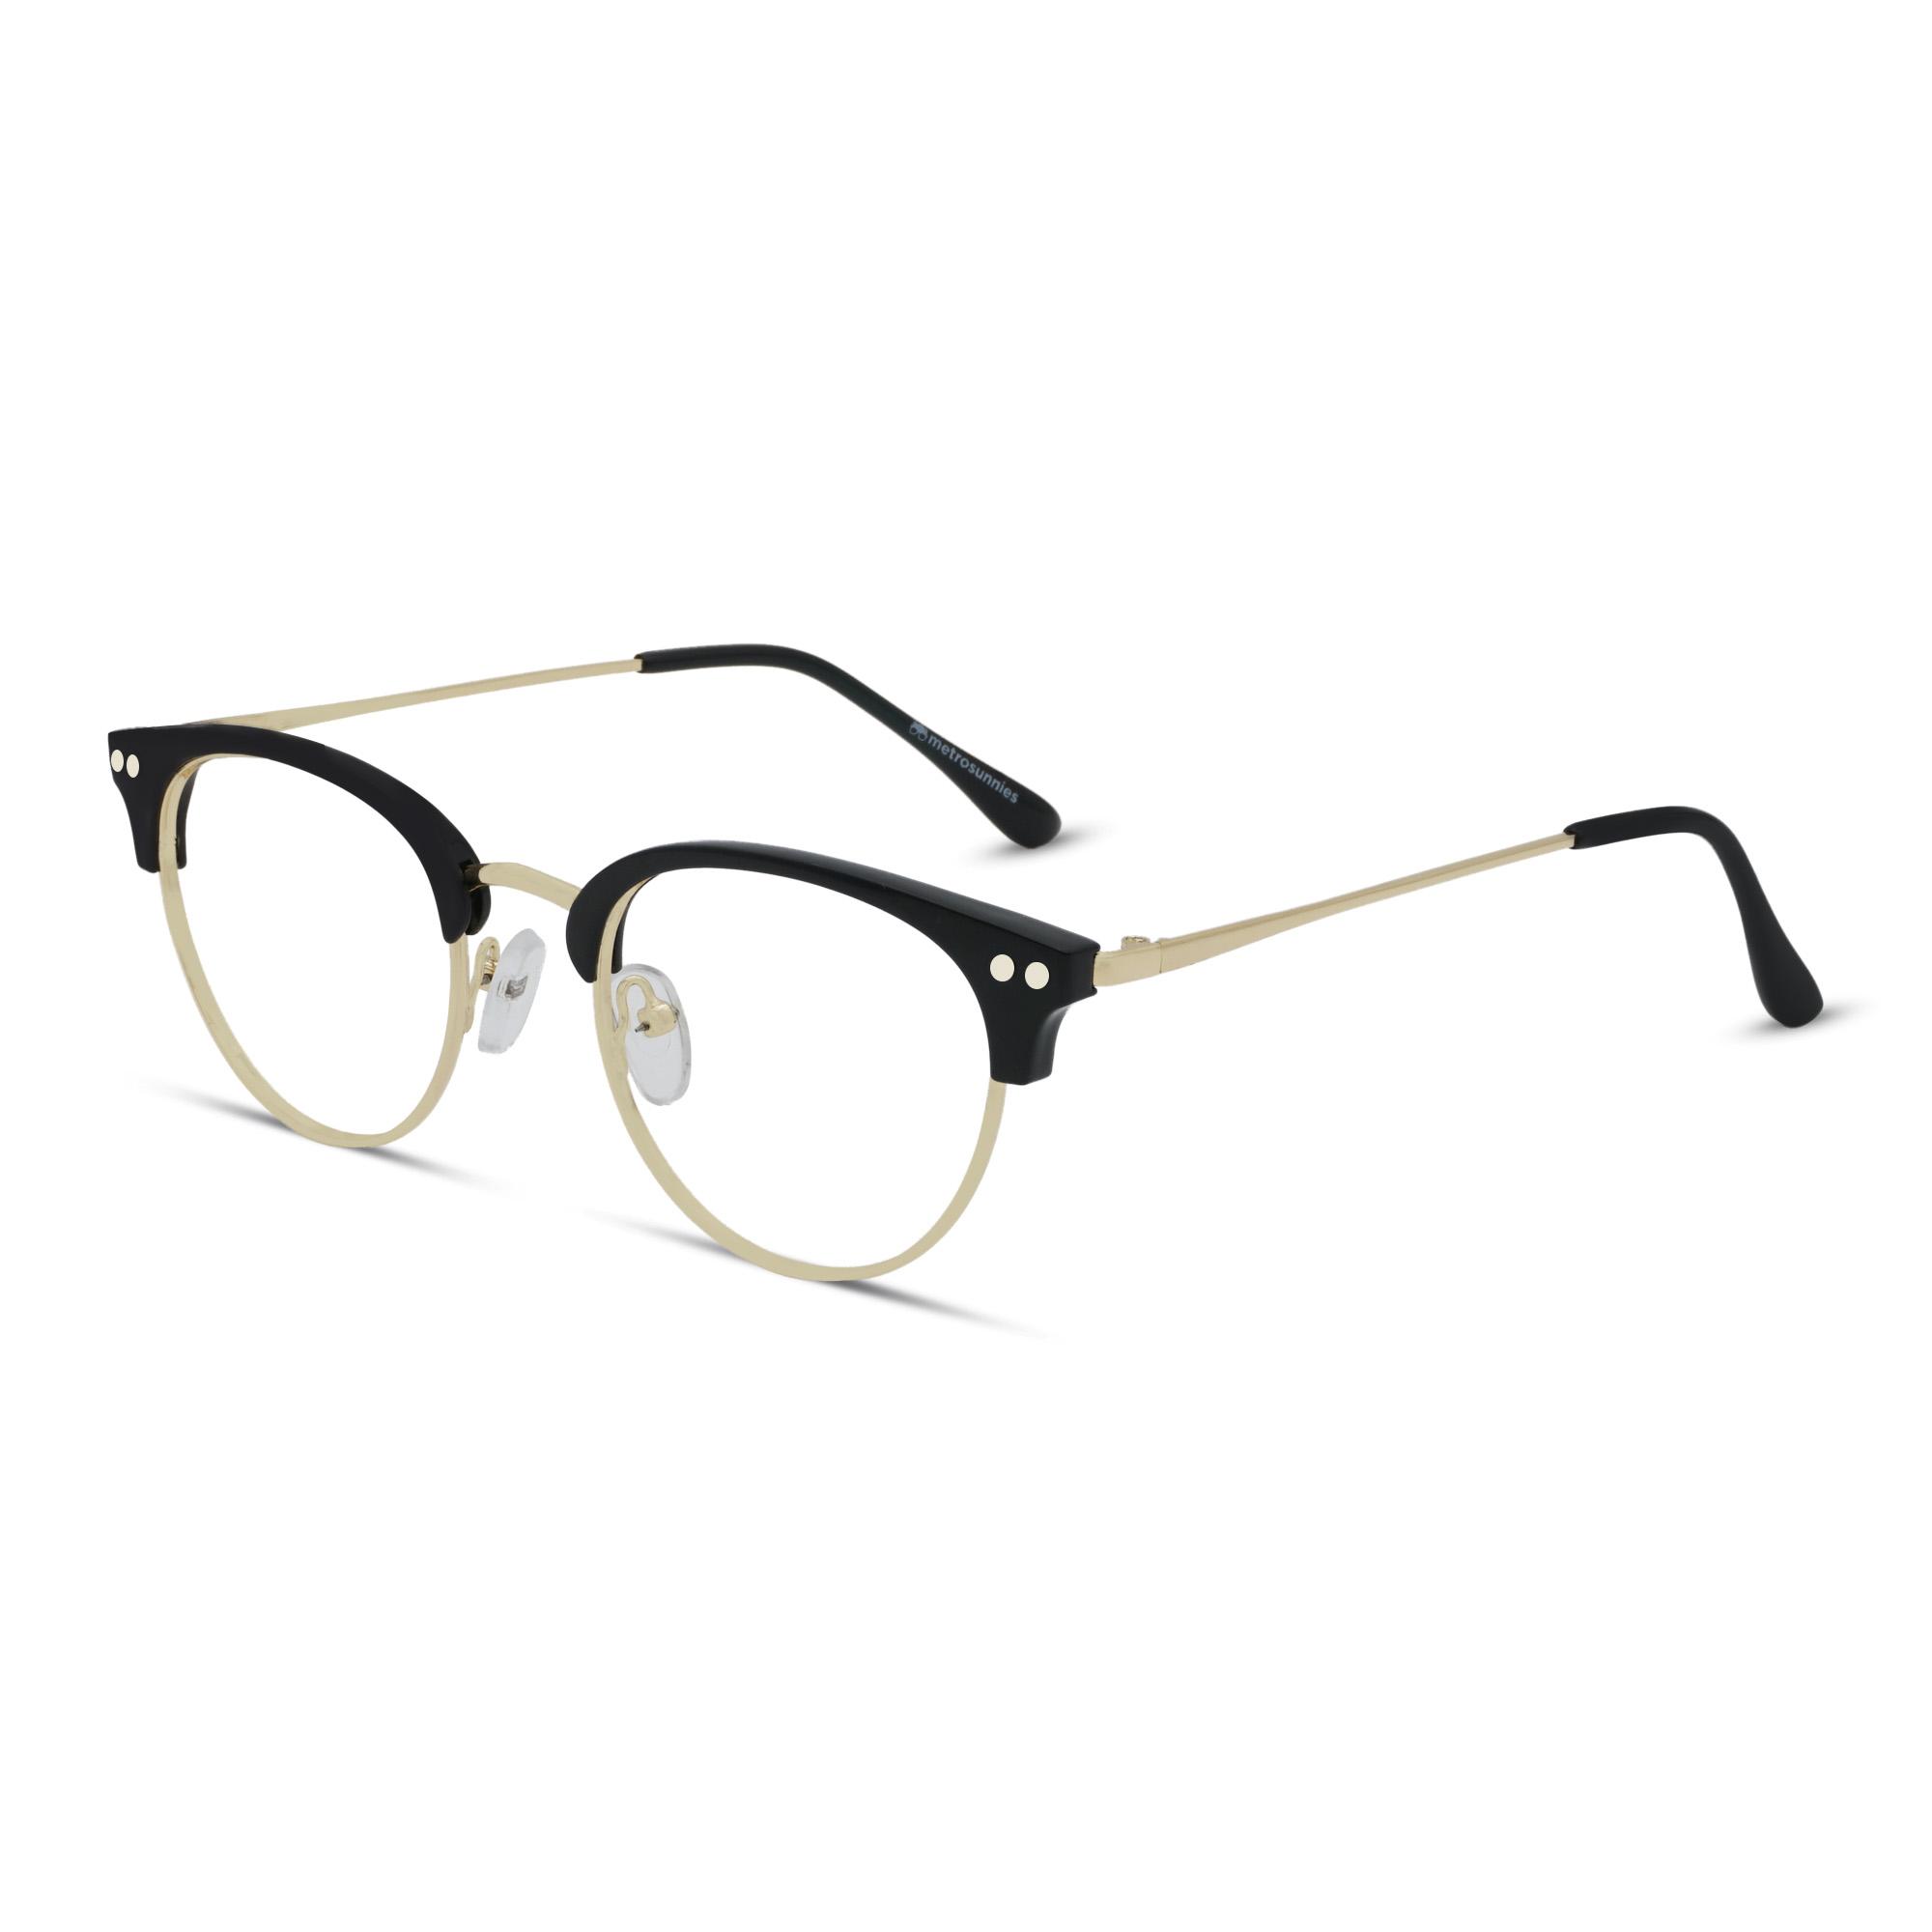 MetroSunnies Sasha Specs / Eyeglasses with Replaceable Lens / Fashion ...